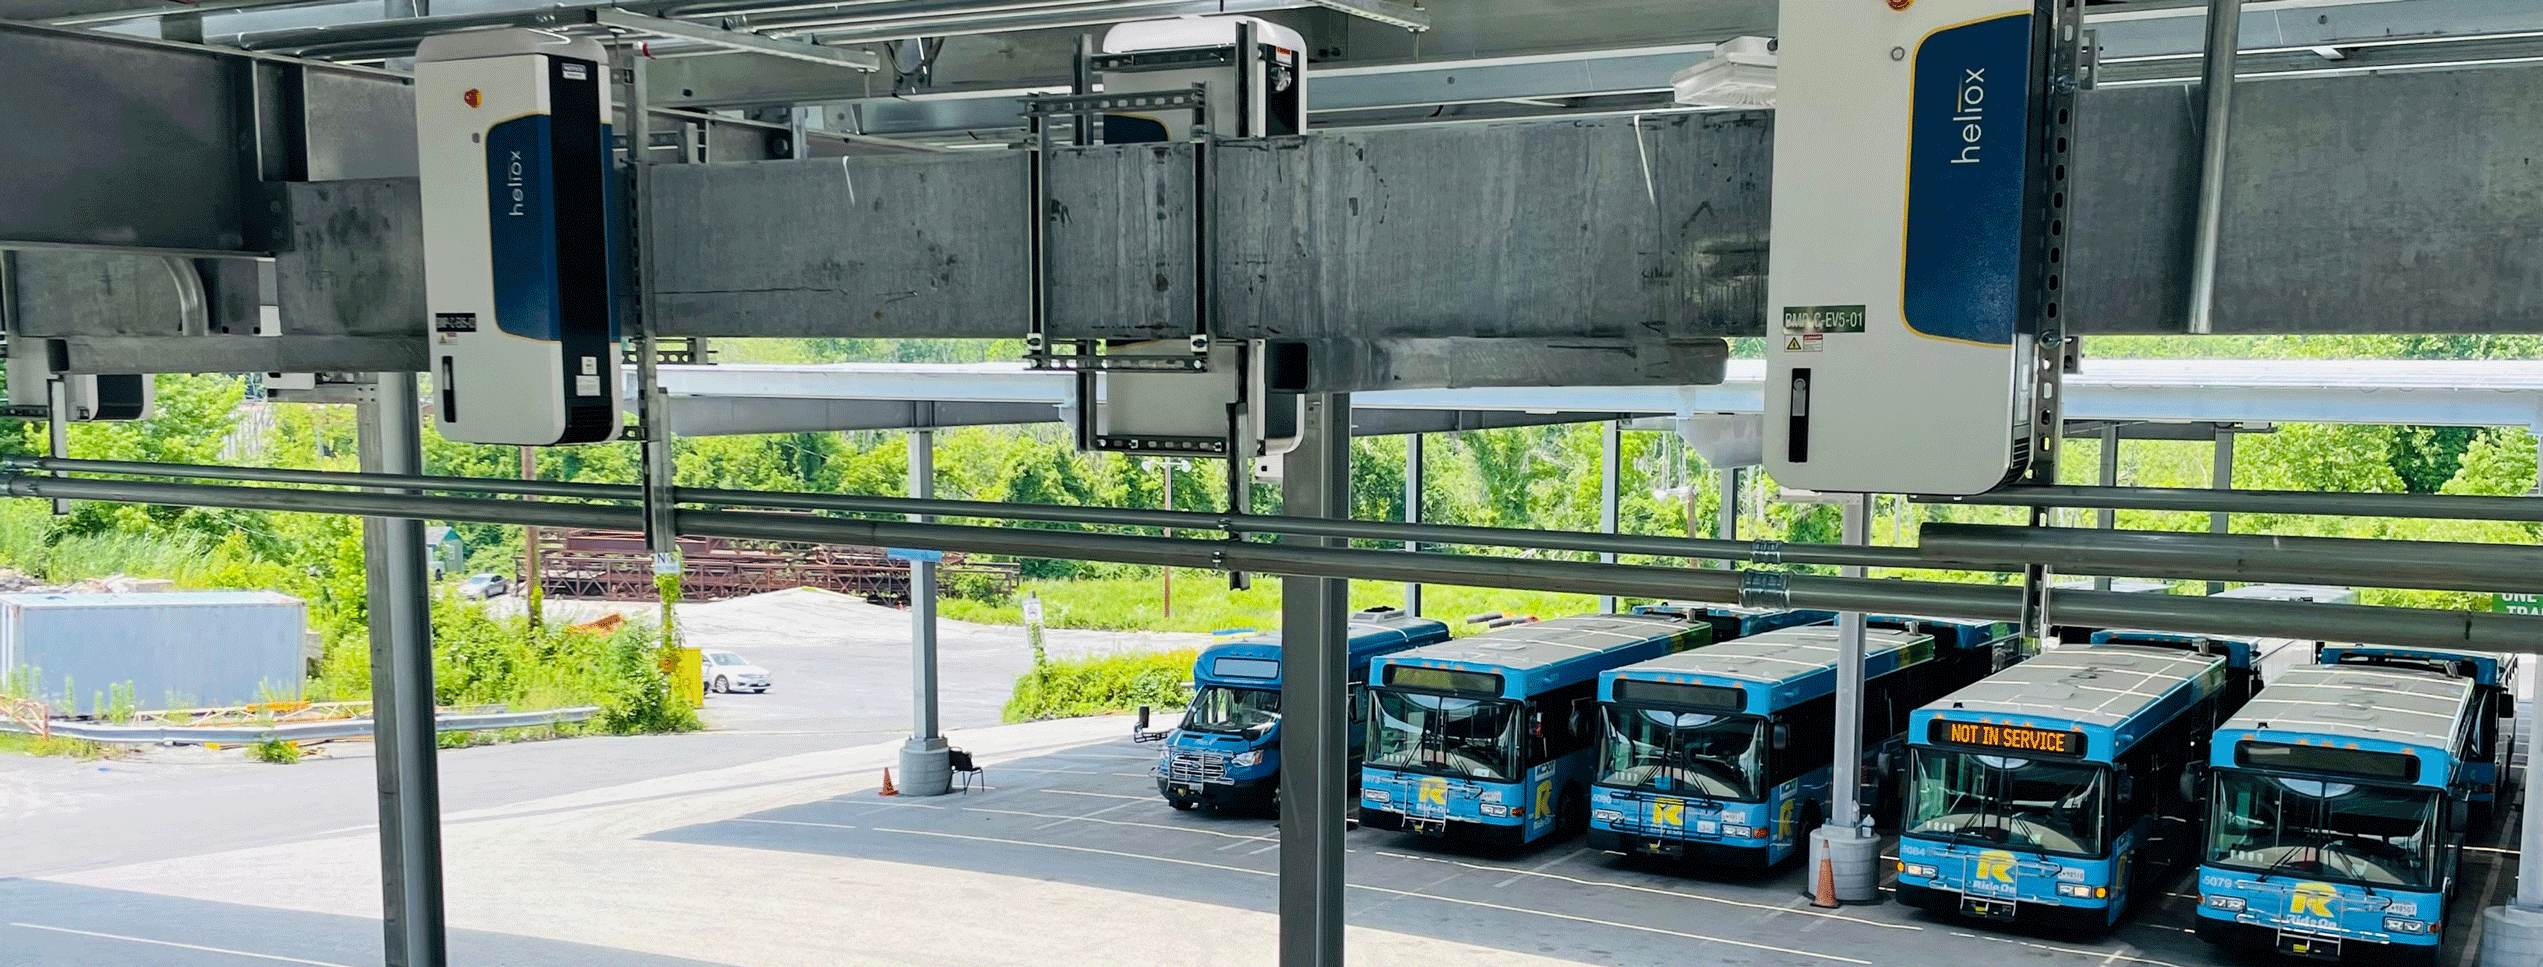 Brookville bus depot microgrid